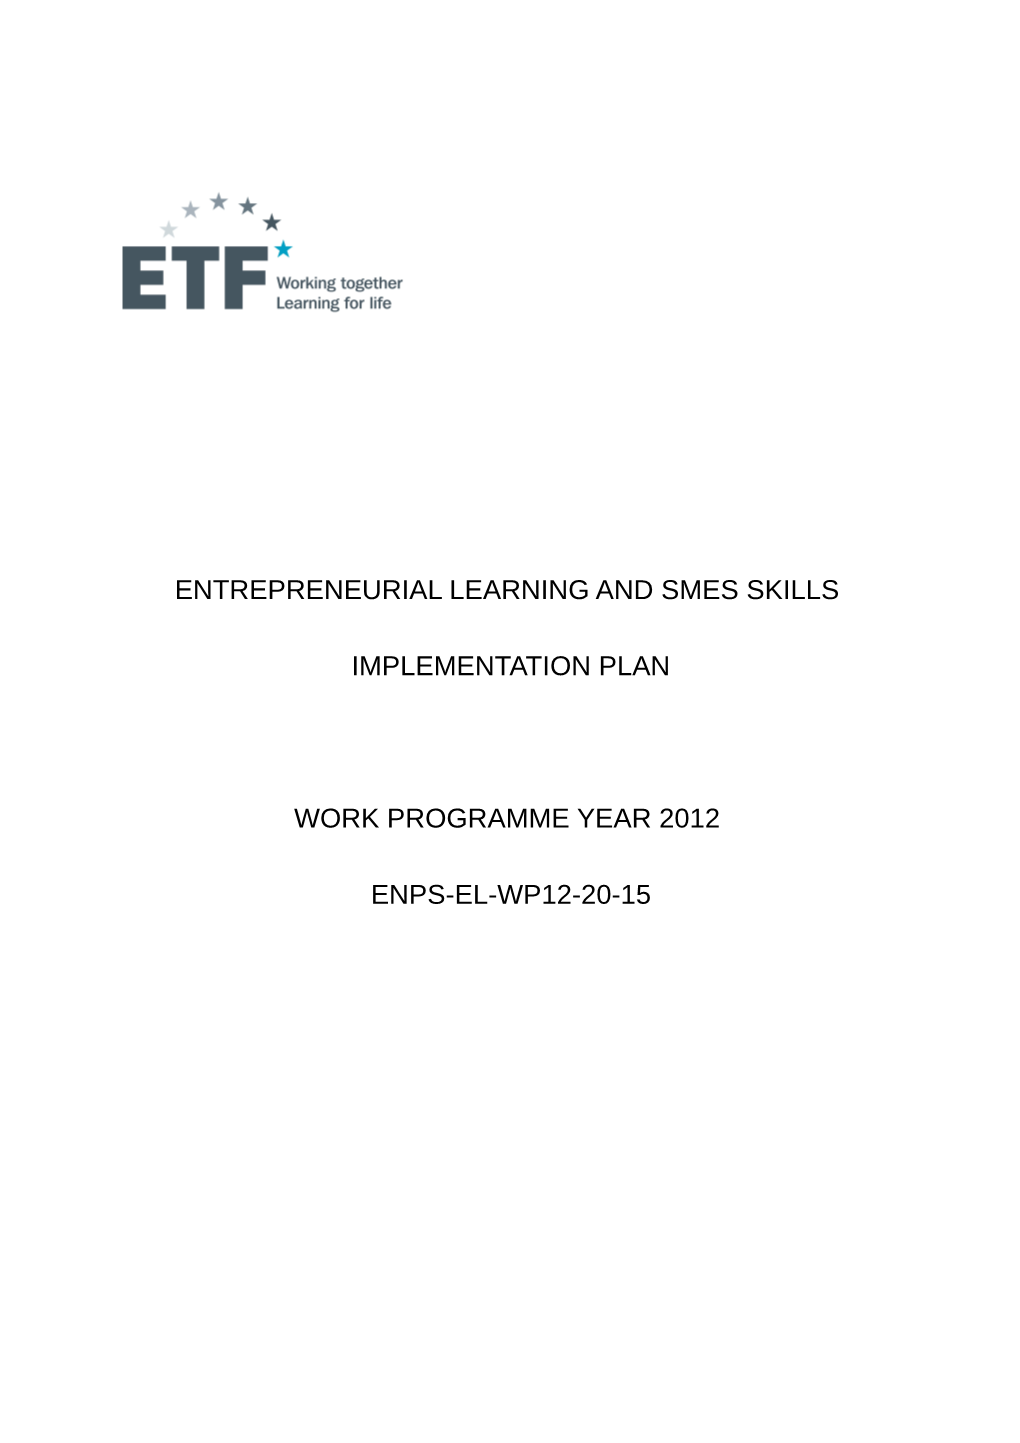 Enterprise and Entrepreneurship Implementation Plan